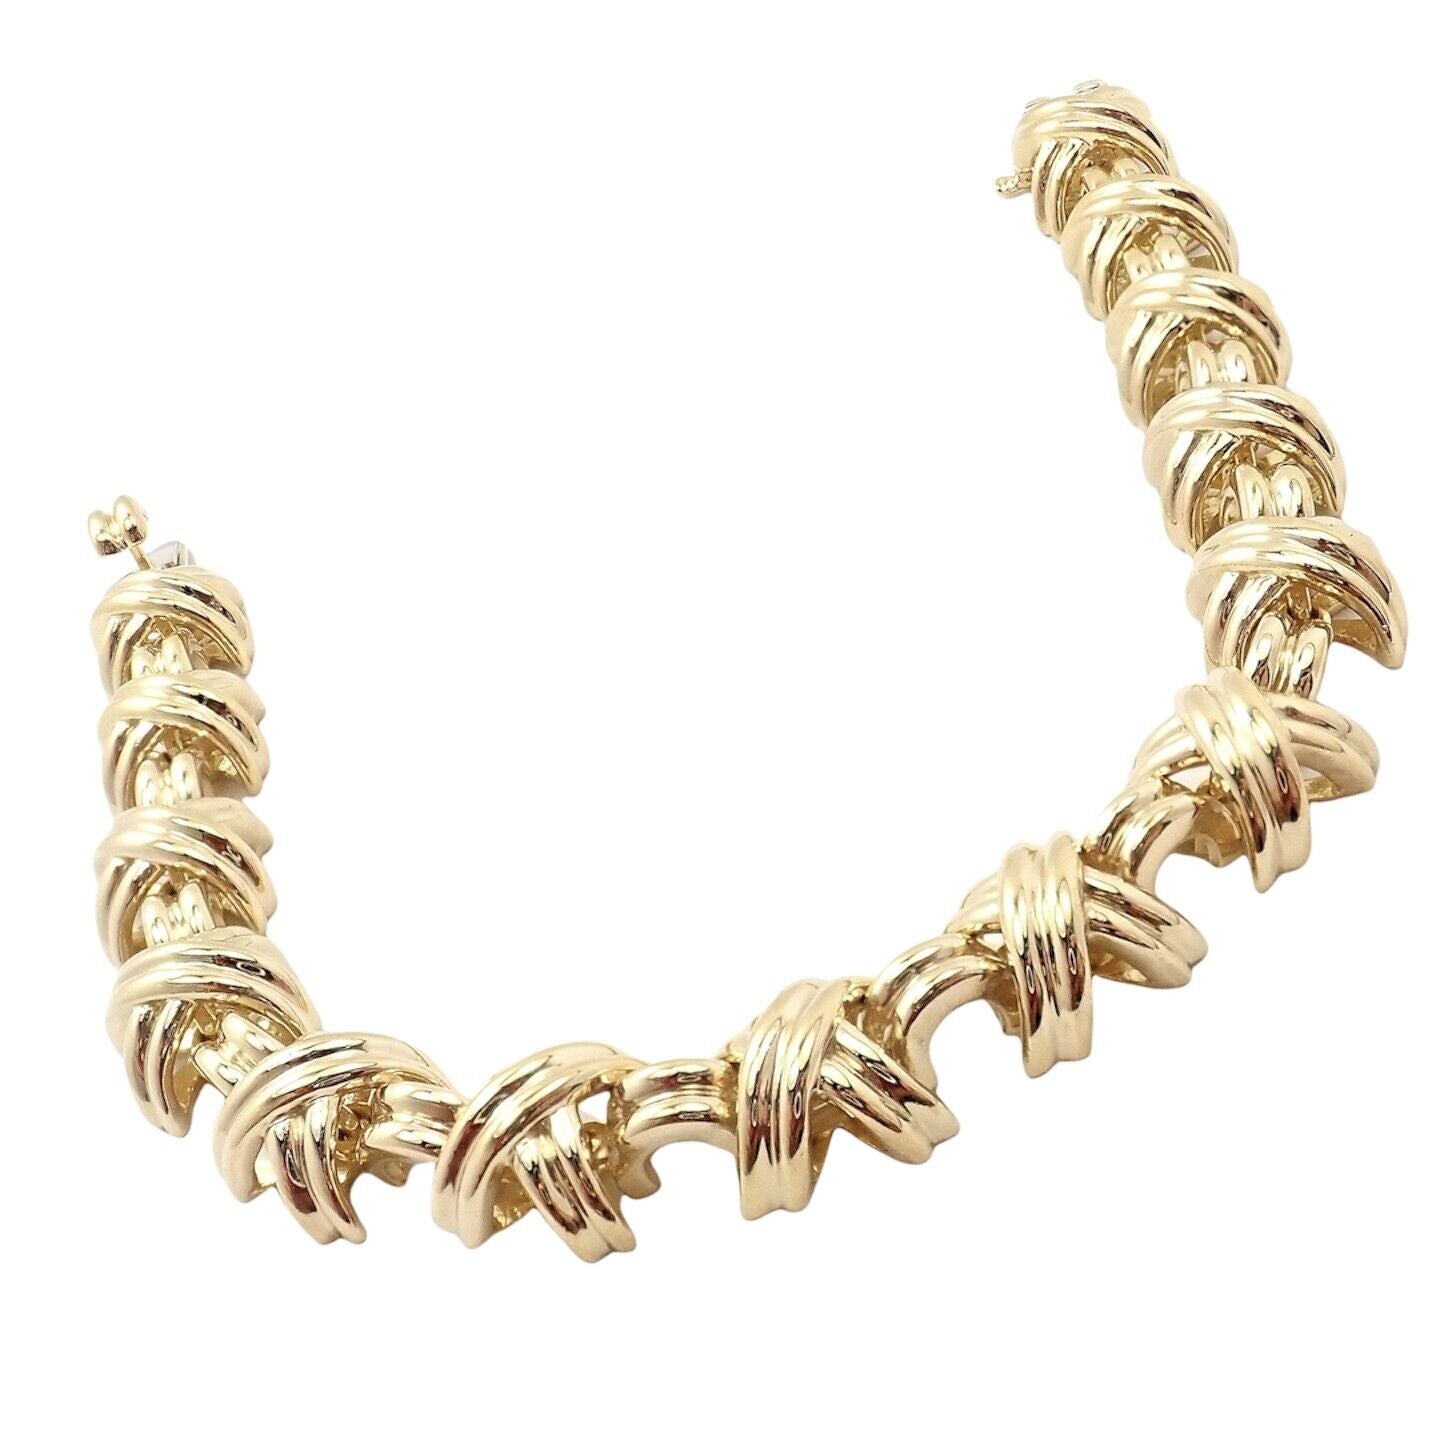 Authentic! Tiffany & Co 18K Yellow Gold Classic x Link Bracelet